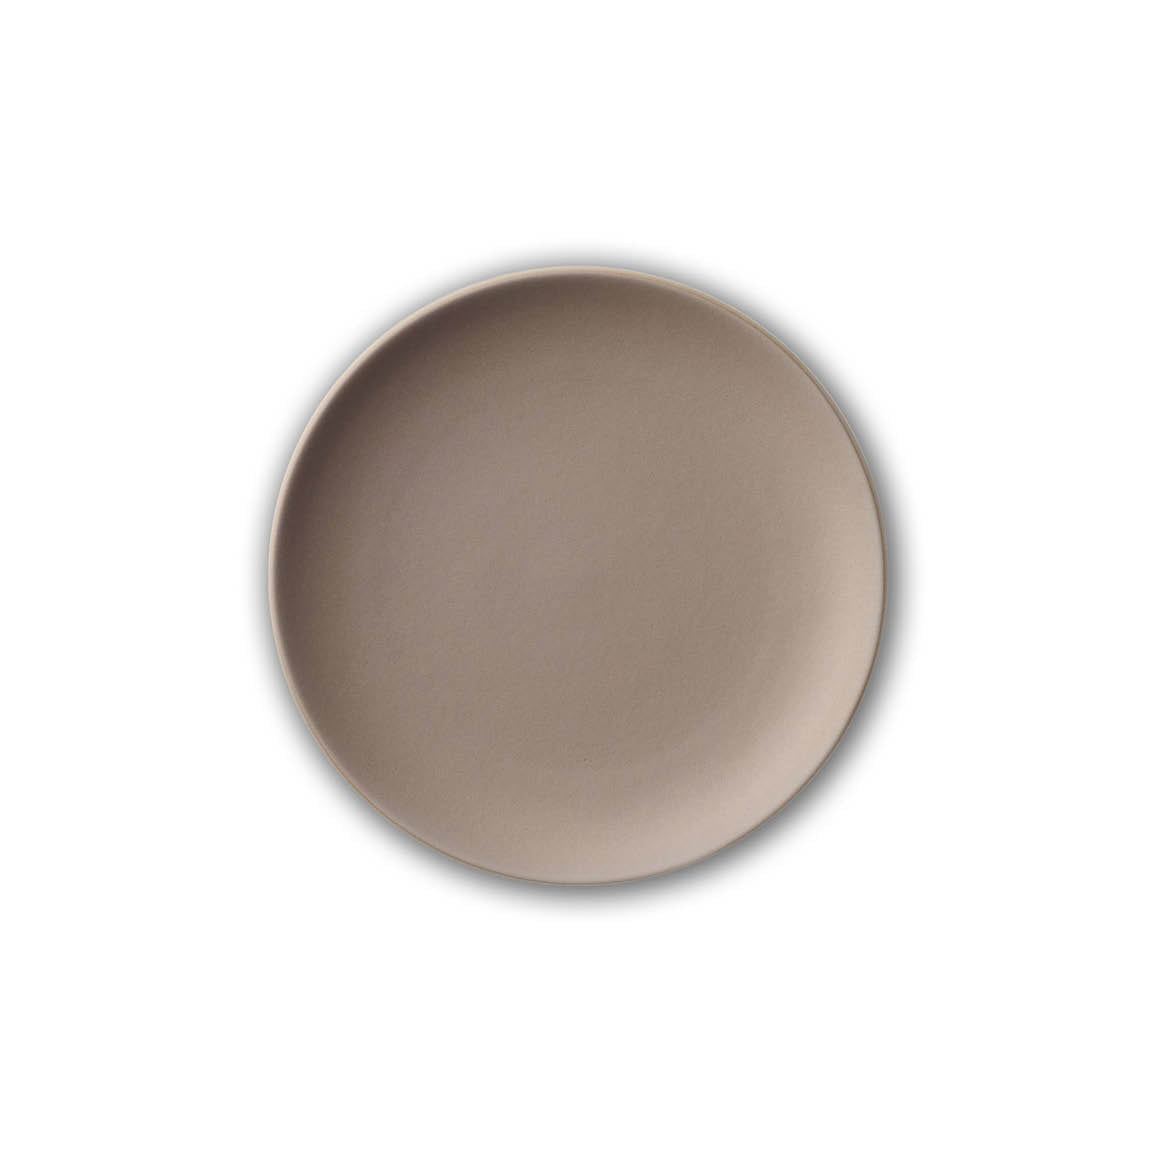 Heath Ceramics Cocoa Fawn Bread Plate, Lightly Used